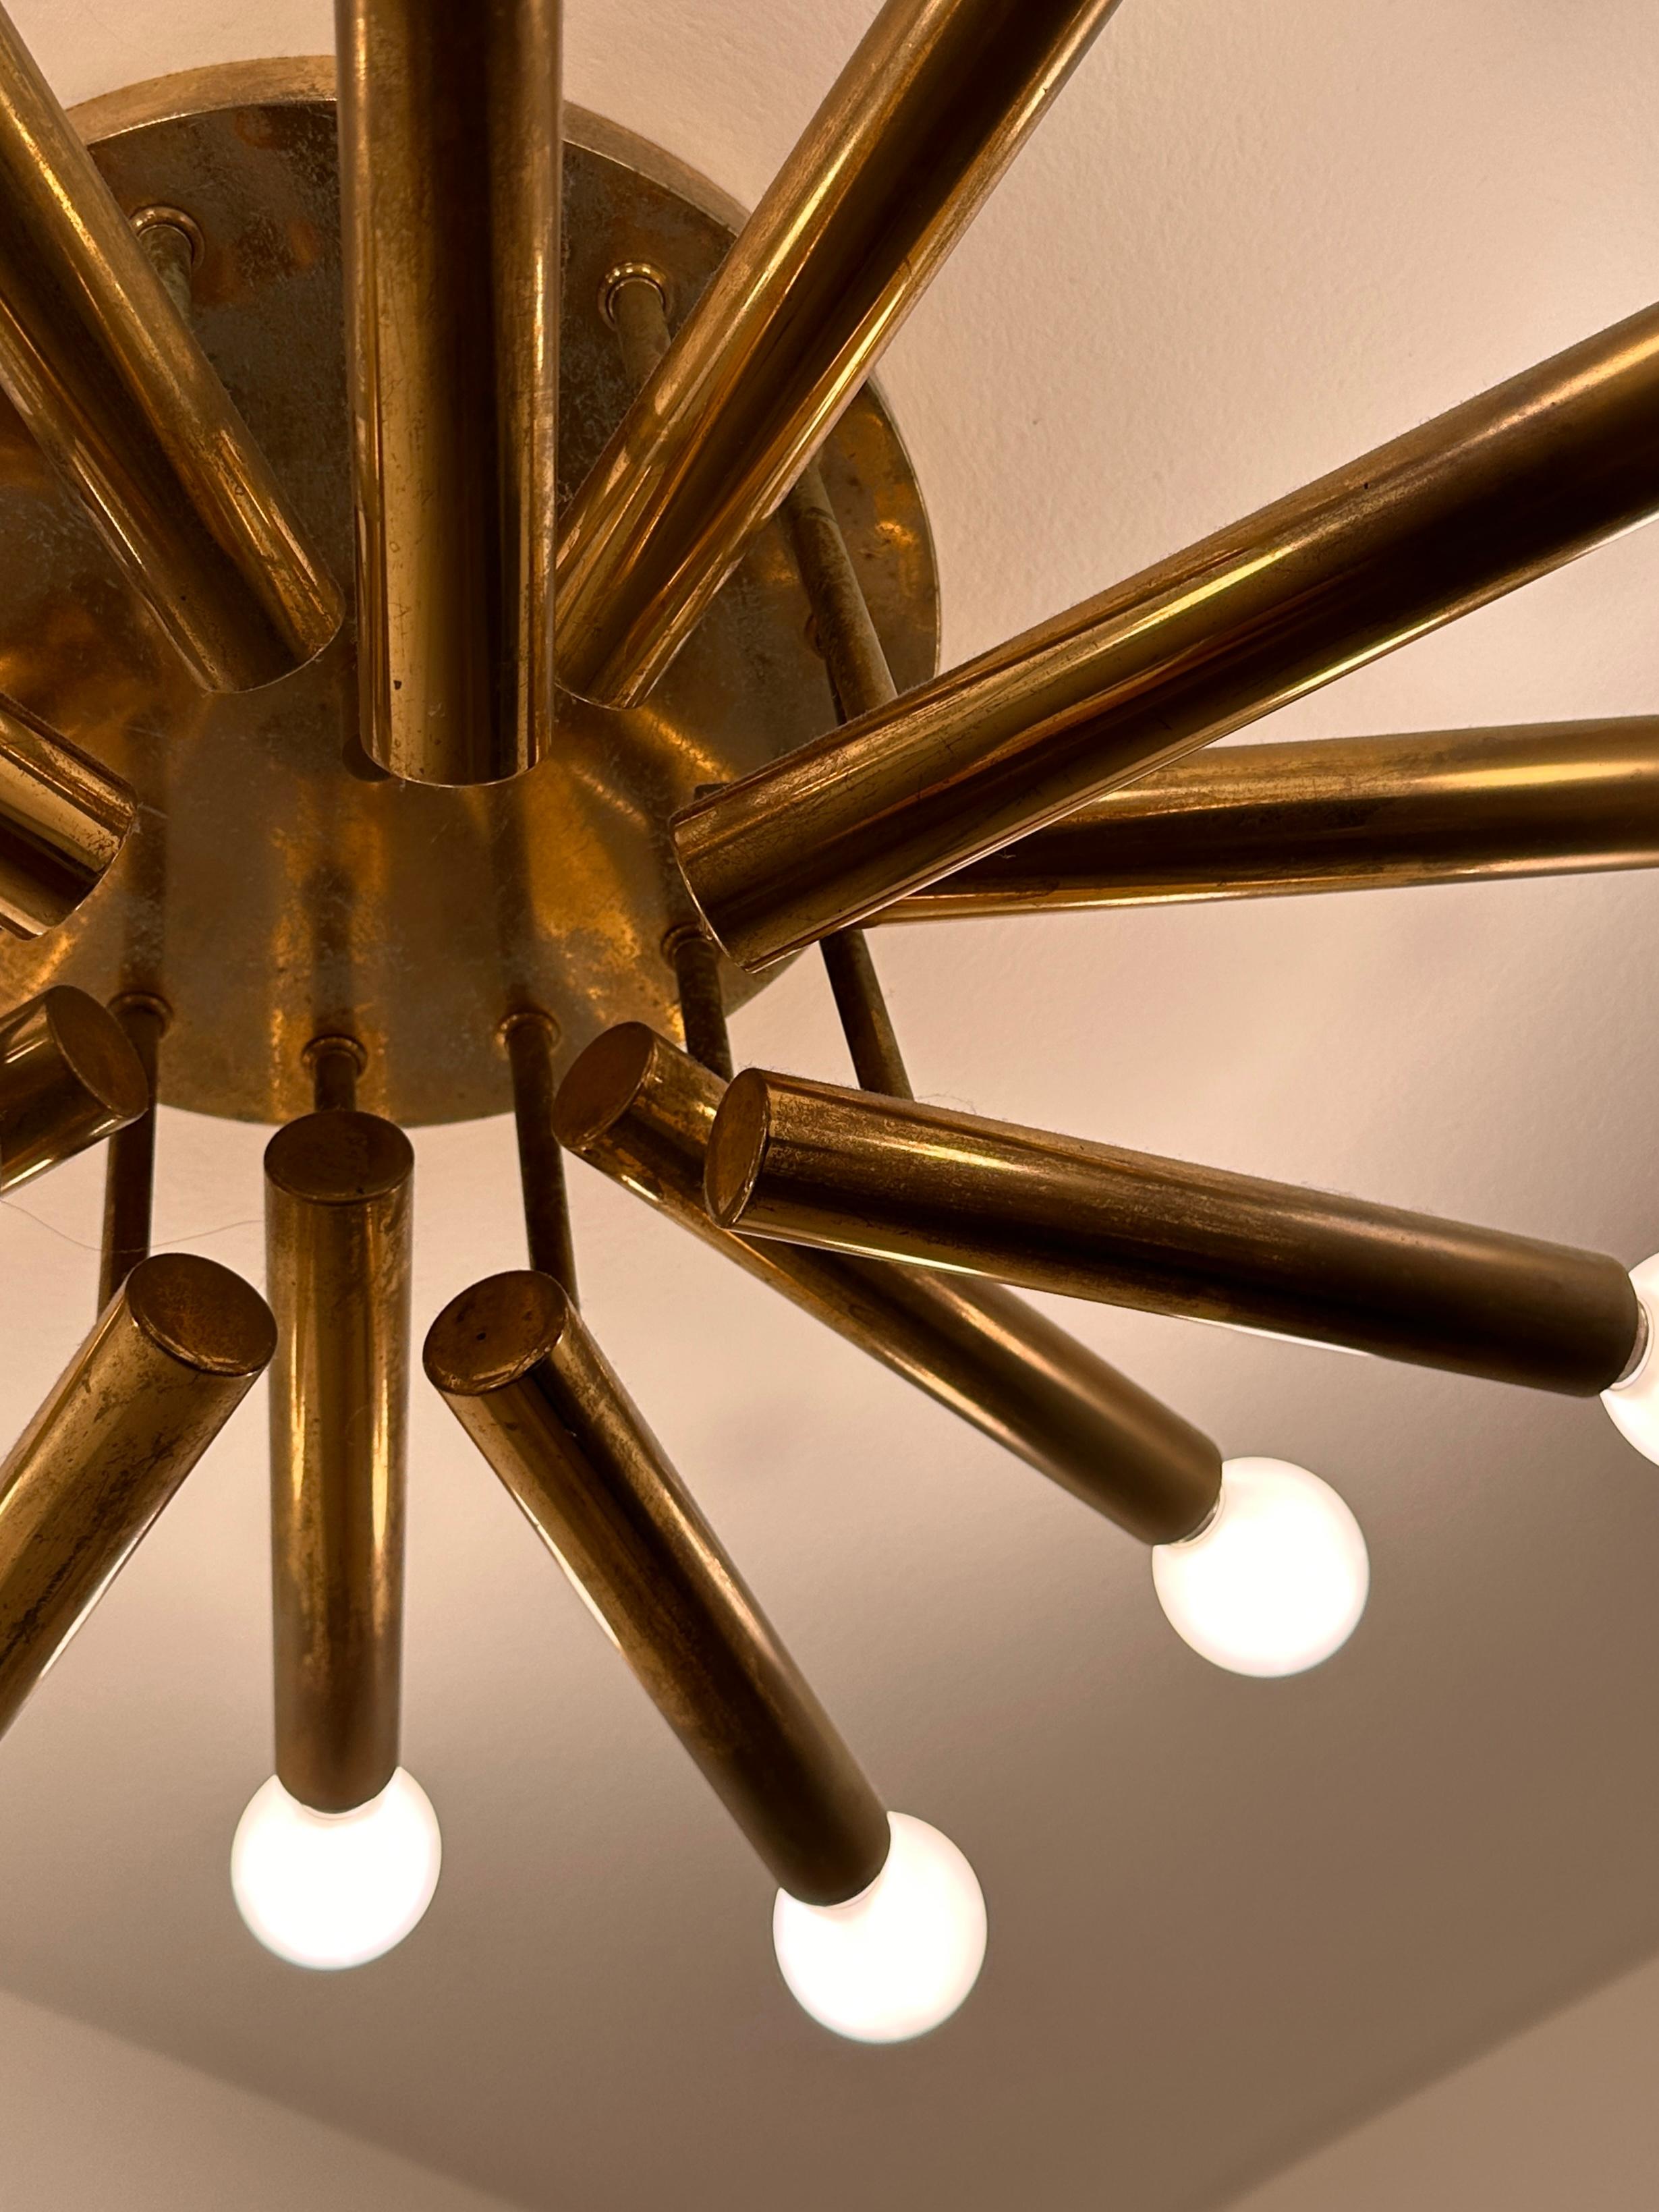 Geatano Sciolari Brass Sunburst Sputnik Ceiling Lamp or Wall Sconce 1960s 1